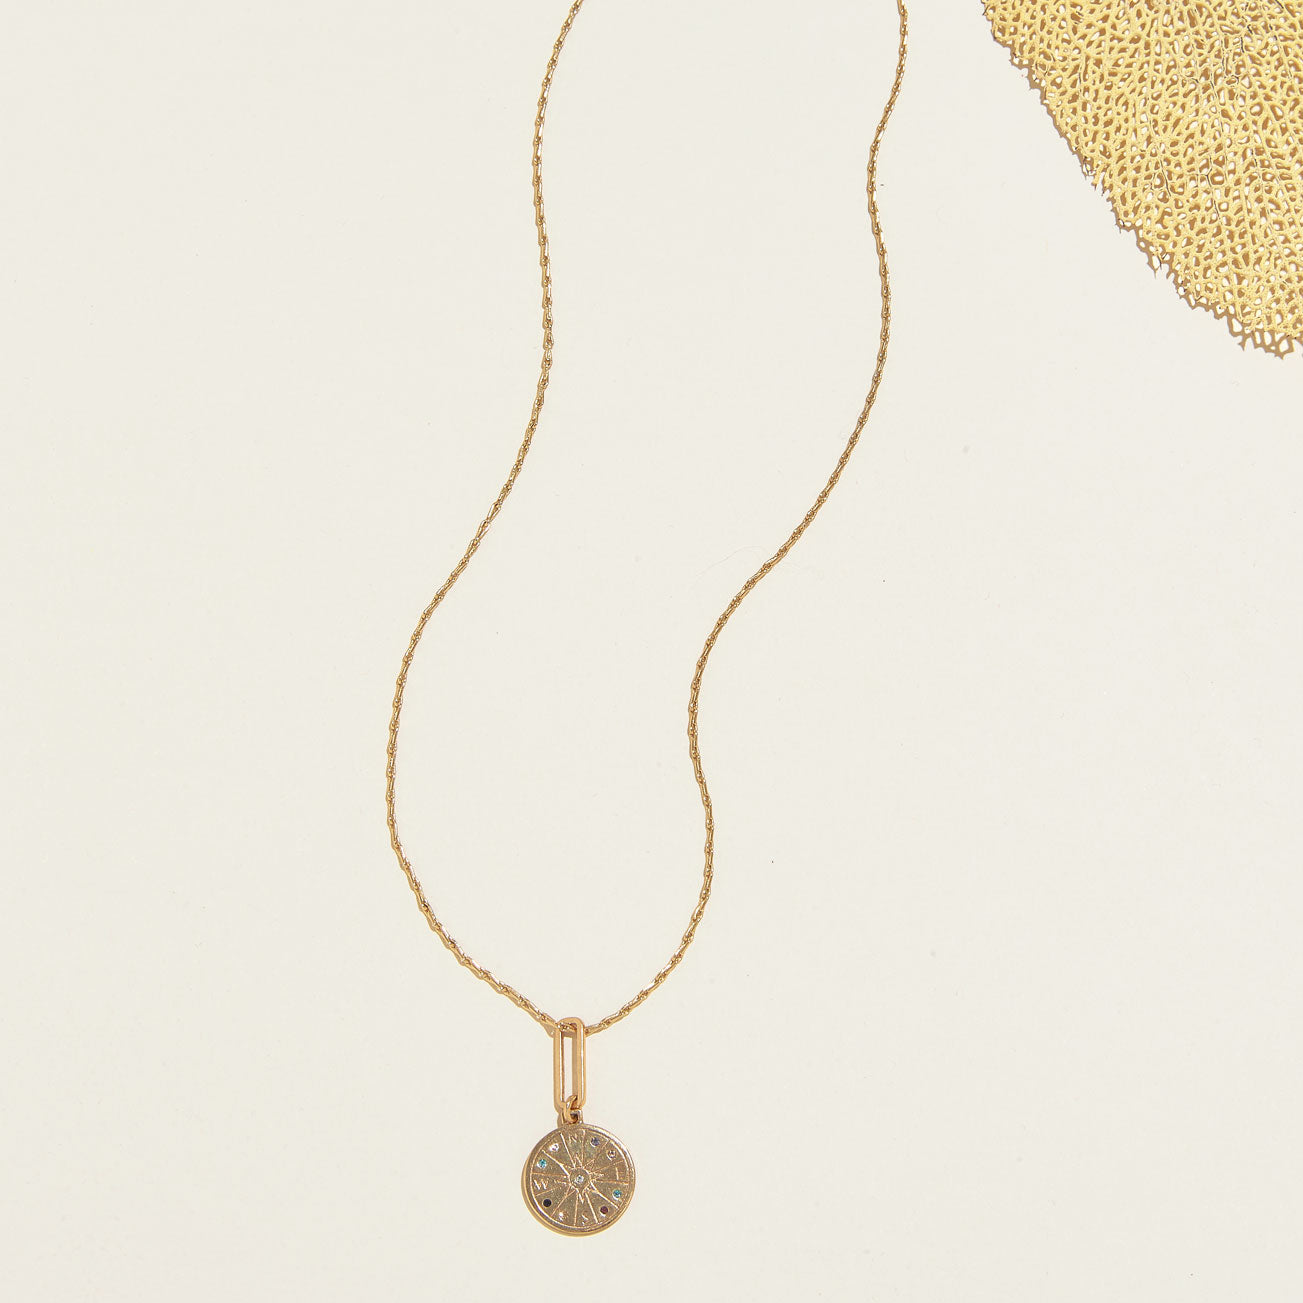 Necklaces & Pendants - Gold, Beaded & Pearl Necklaces | Mignonne Gavigan |  Necklace, Gold pendant necklace, Mignonne gavigan